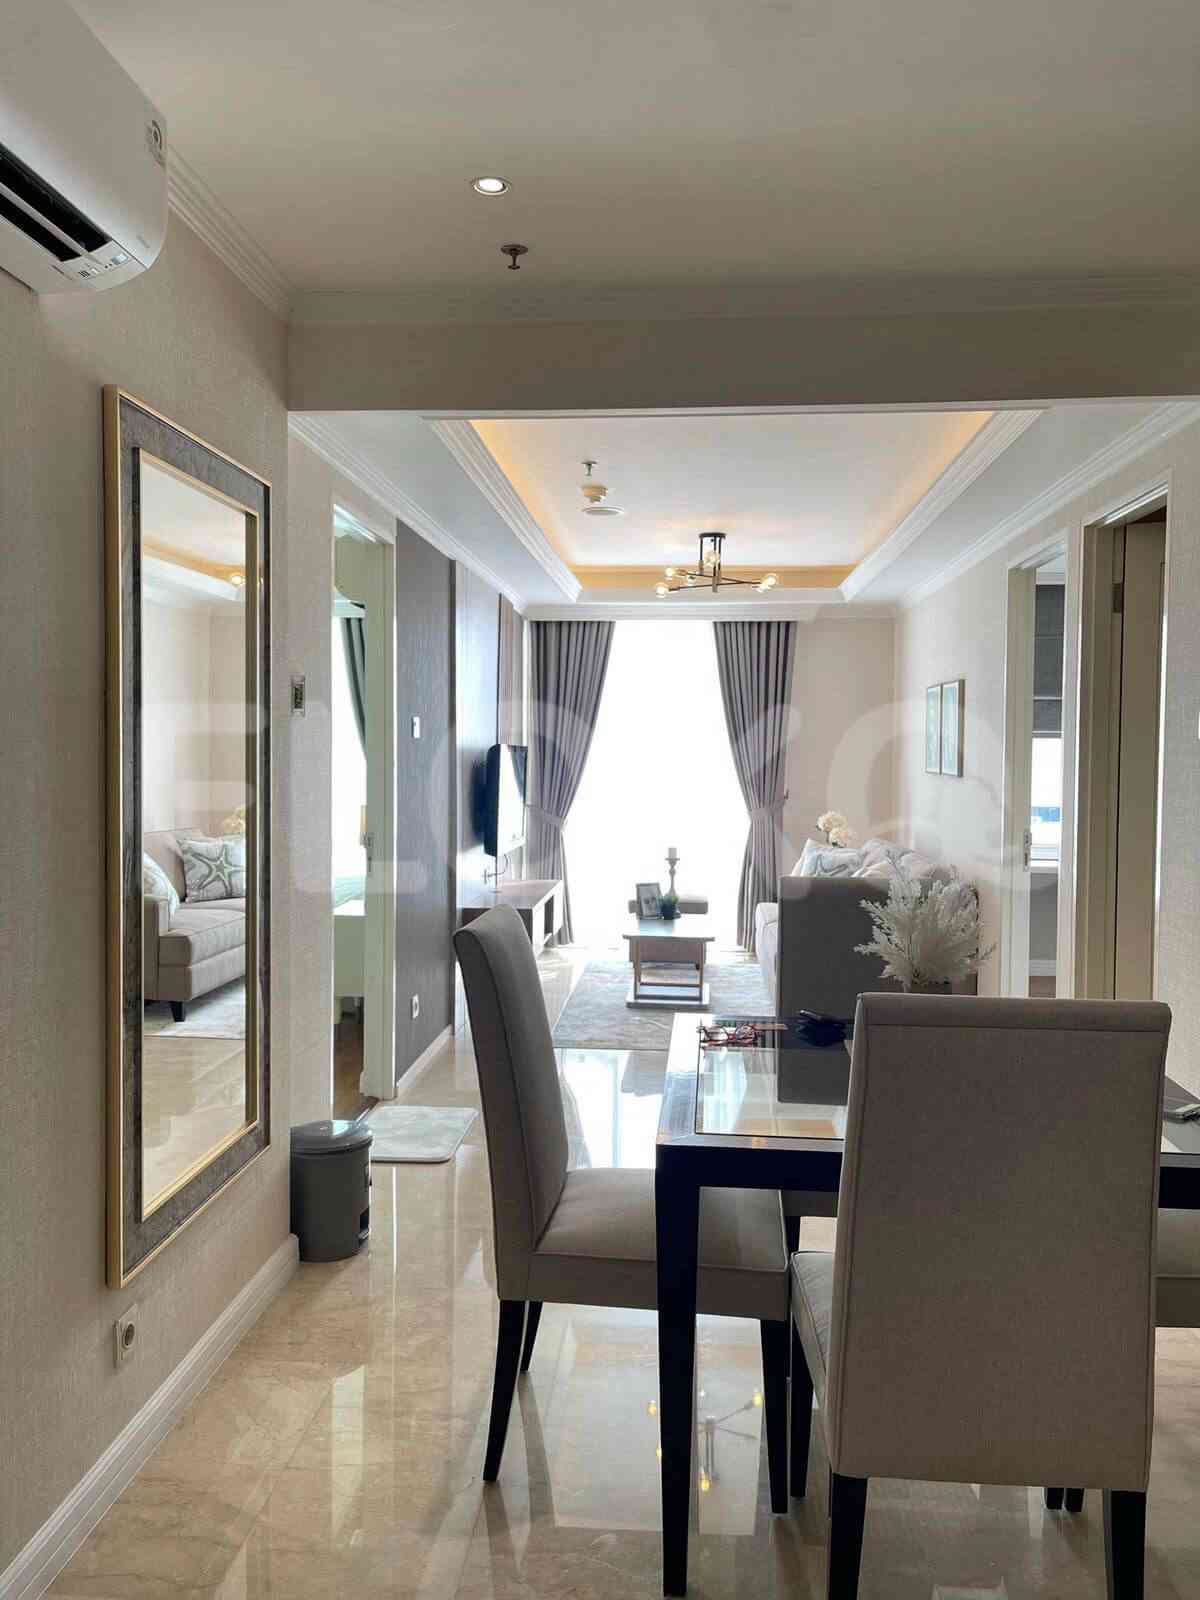 2 Bedroom on 23rd Floor for Rent in FX Residence - fsu54d 4